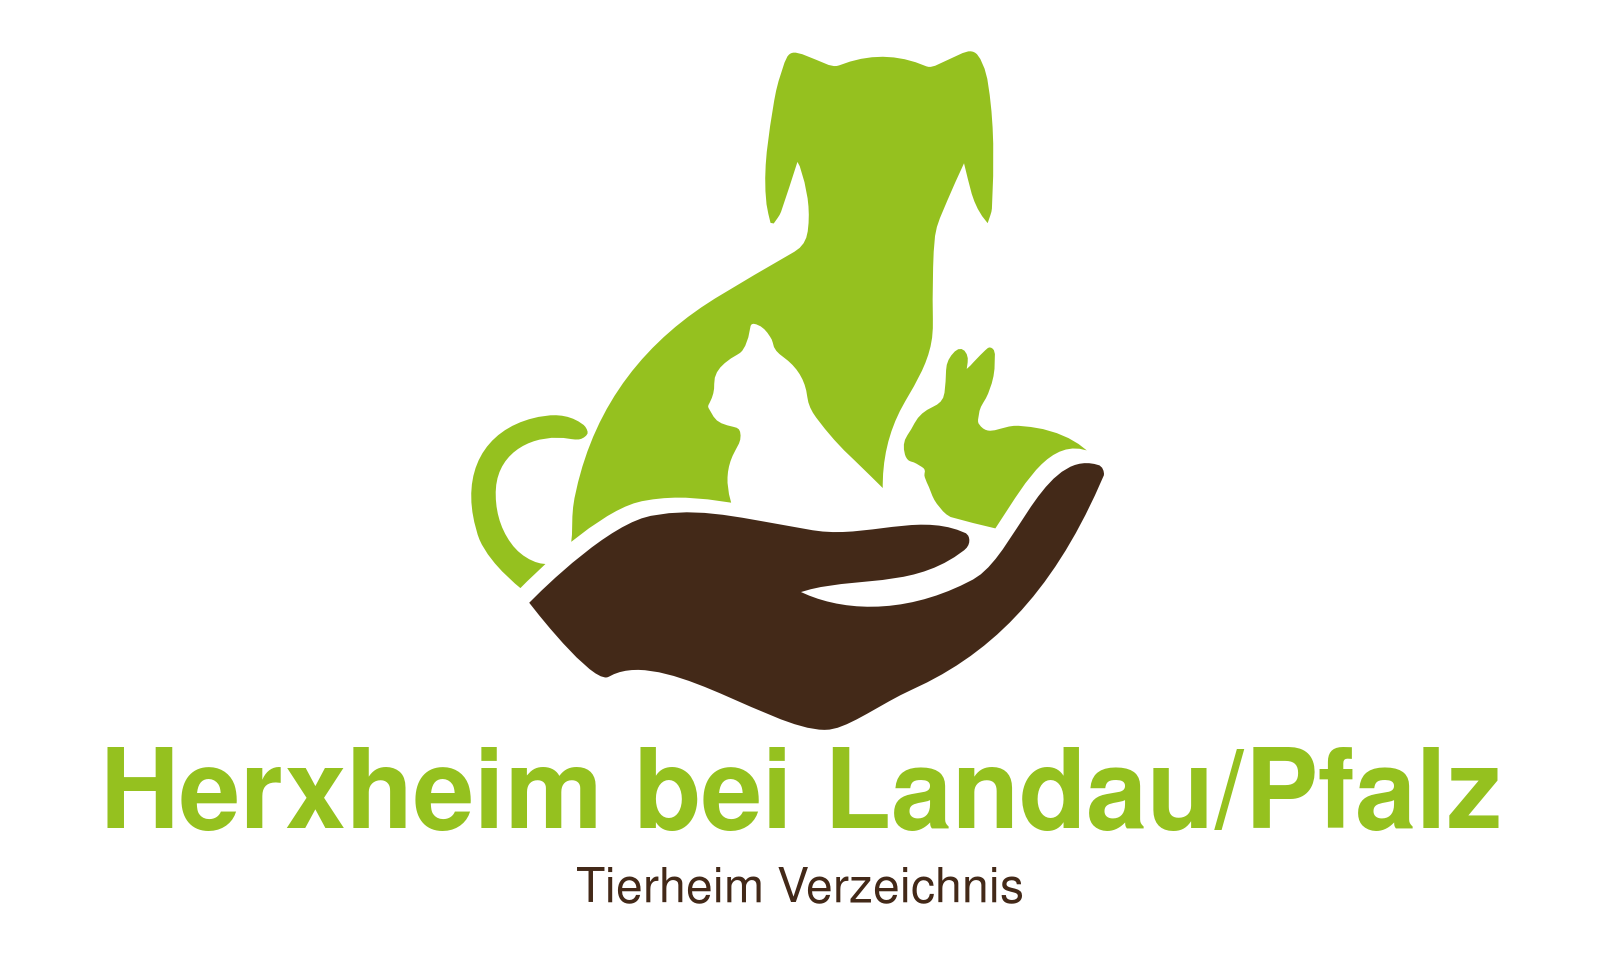 Tierheim Herxheim bei Landau/Pfalz